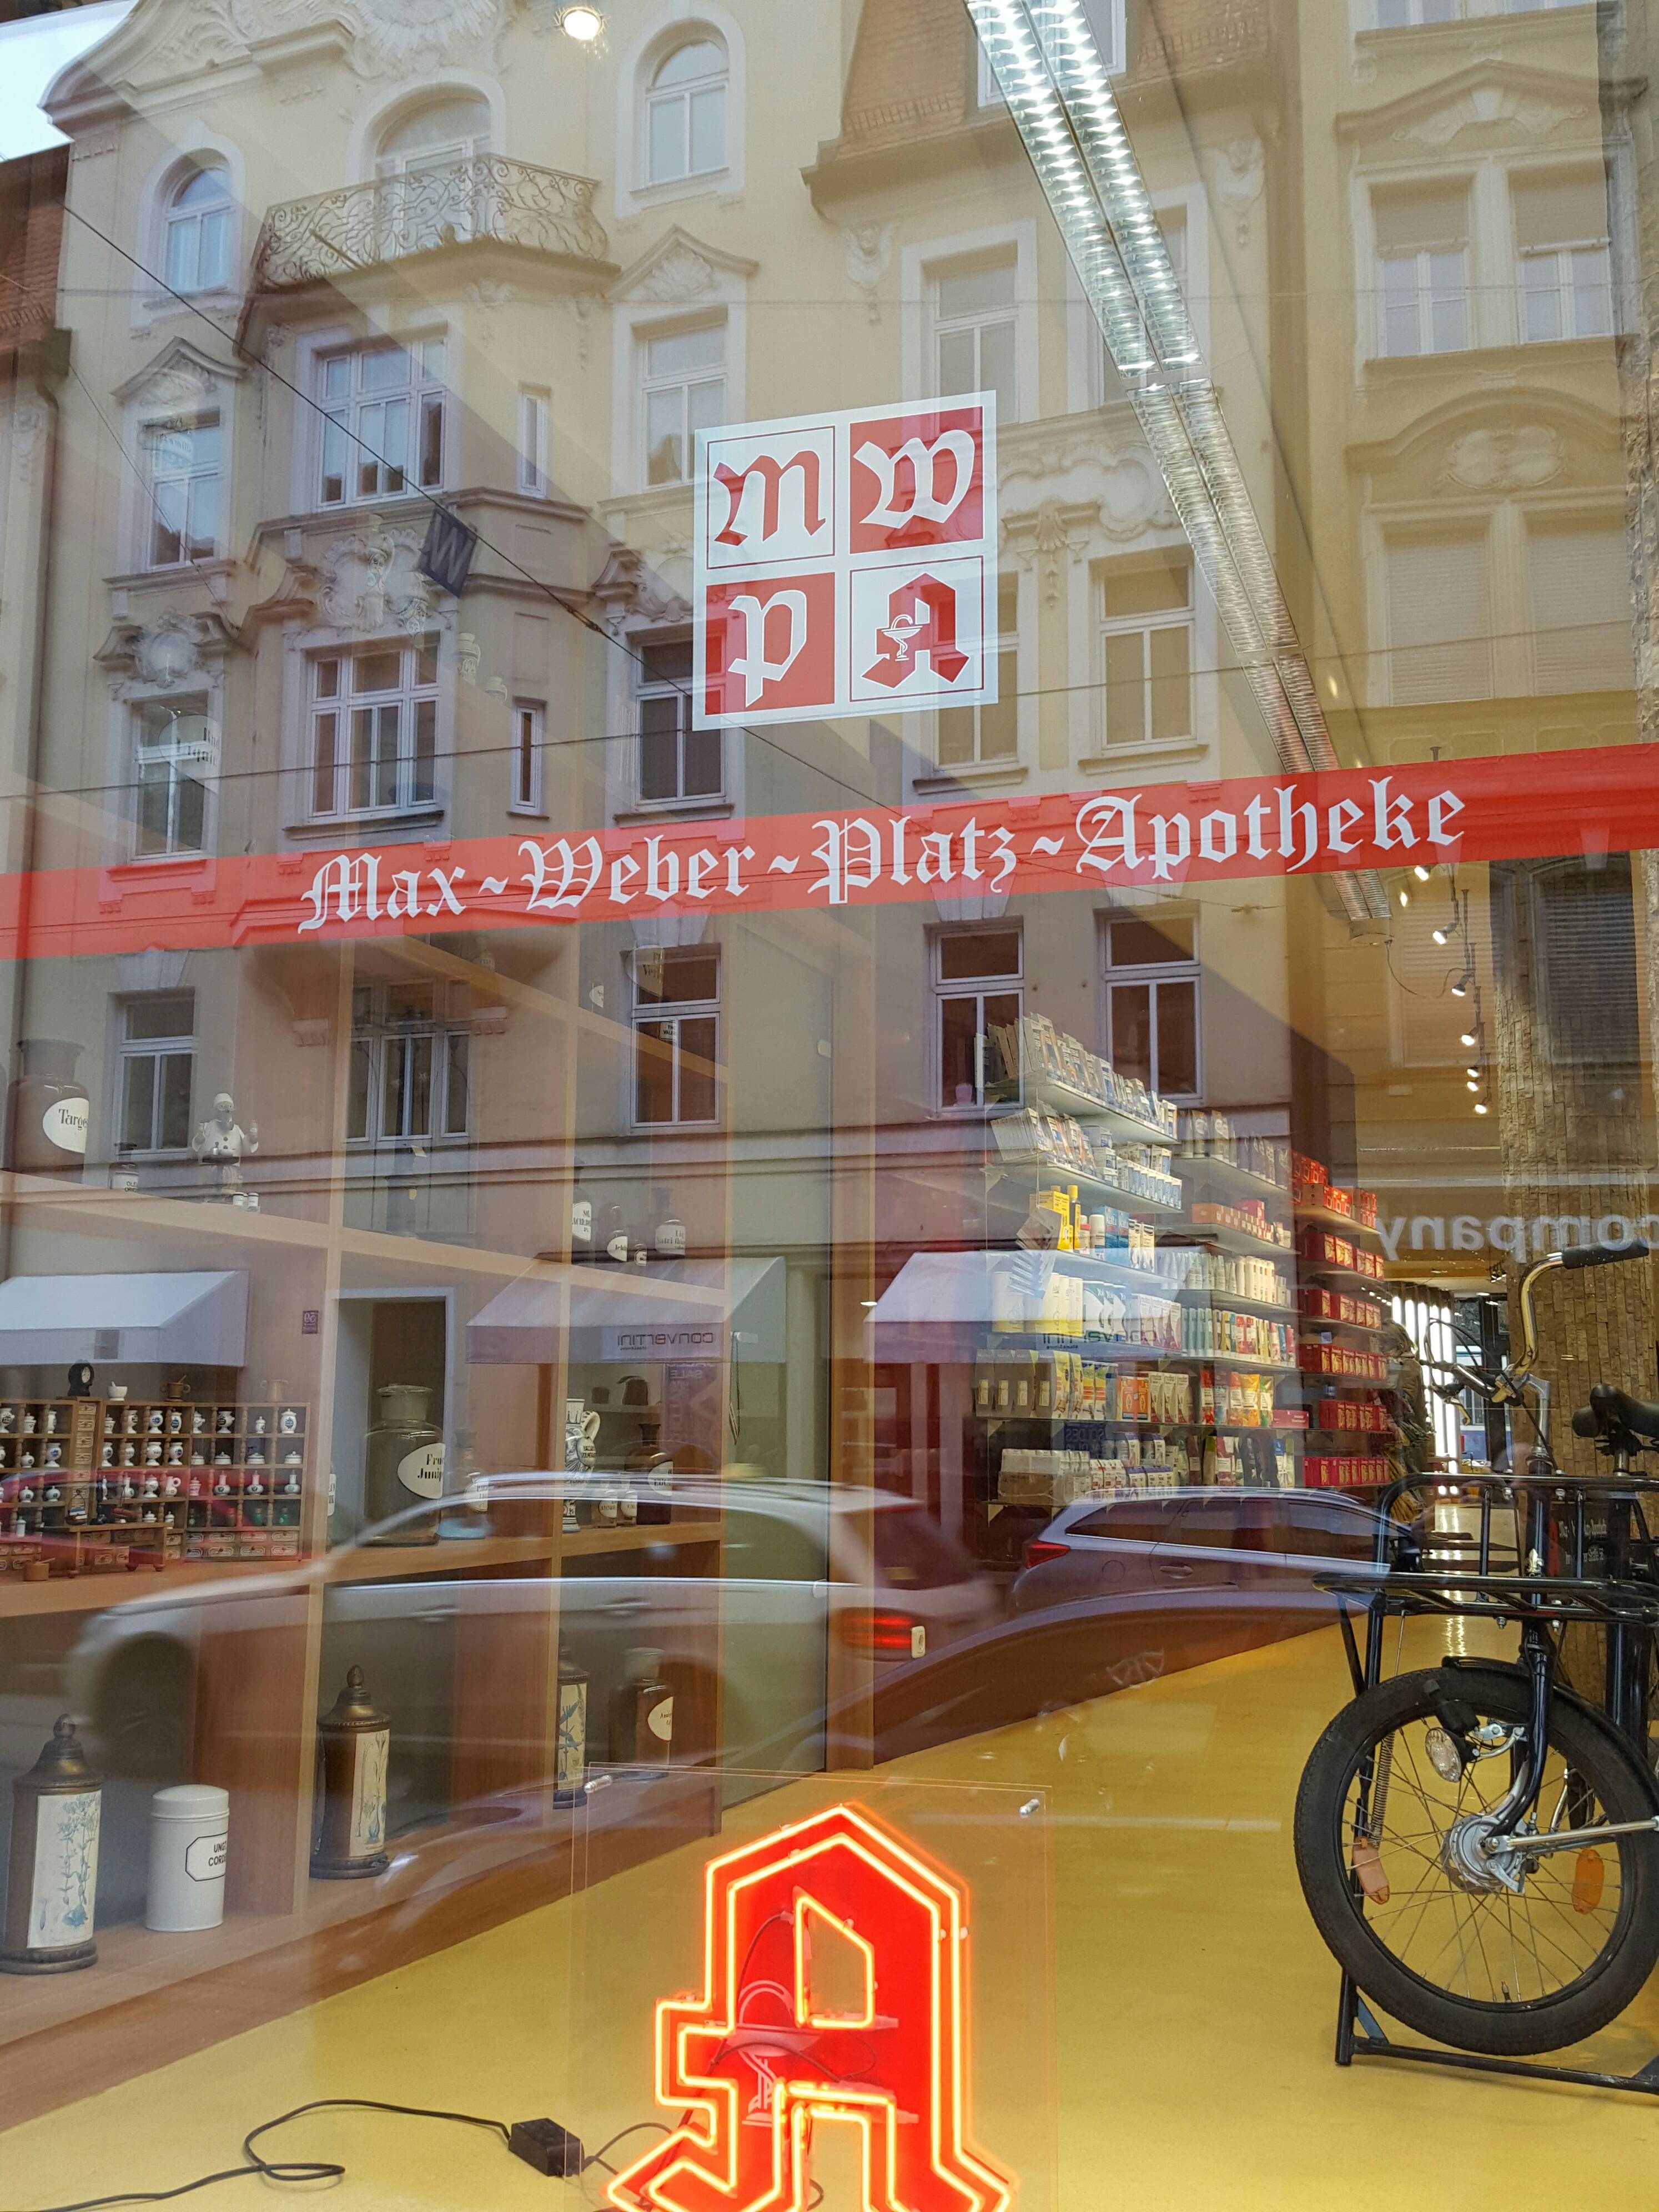 Bild 1 Max-Weber-Platz-Apotheke in München